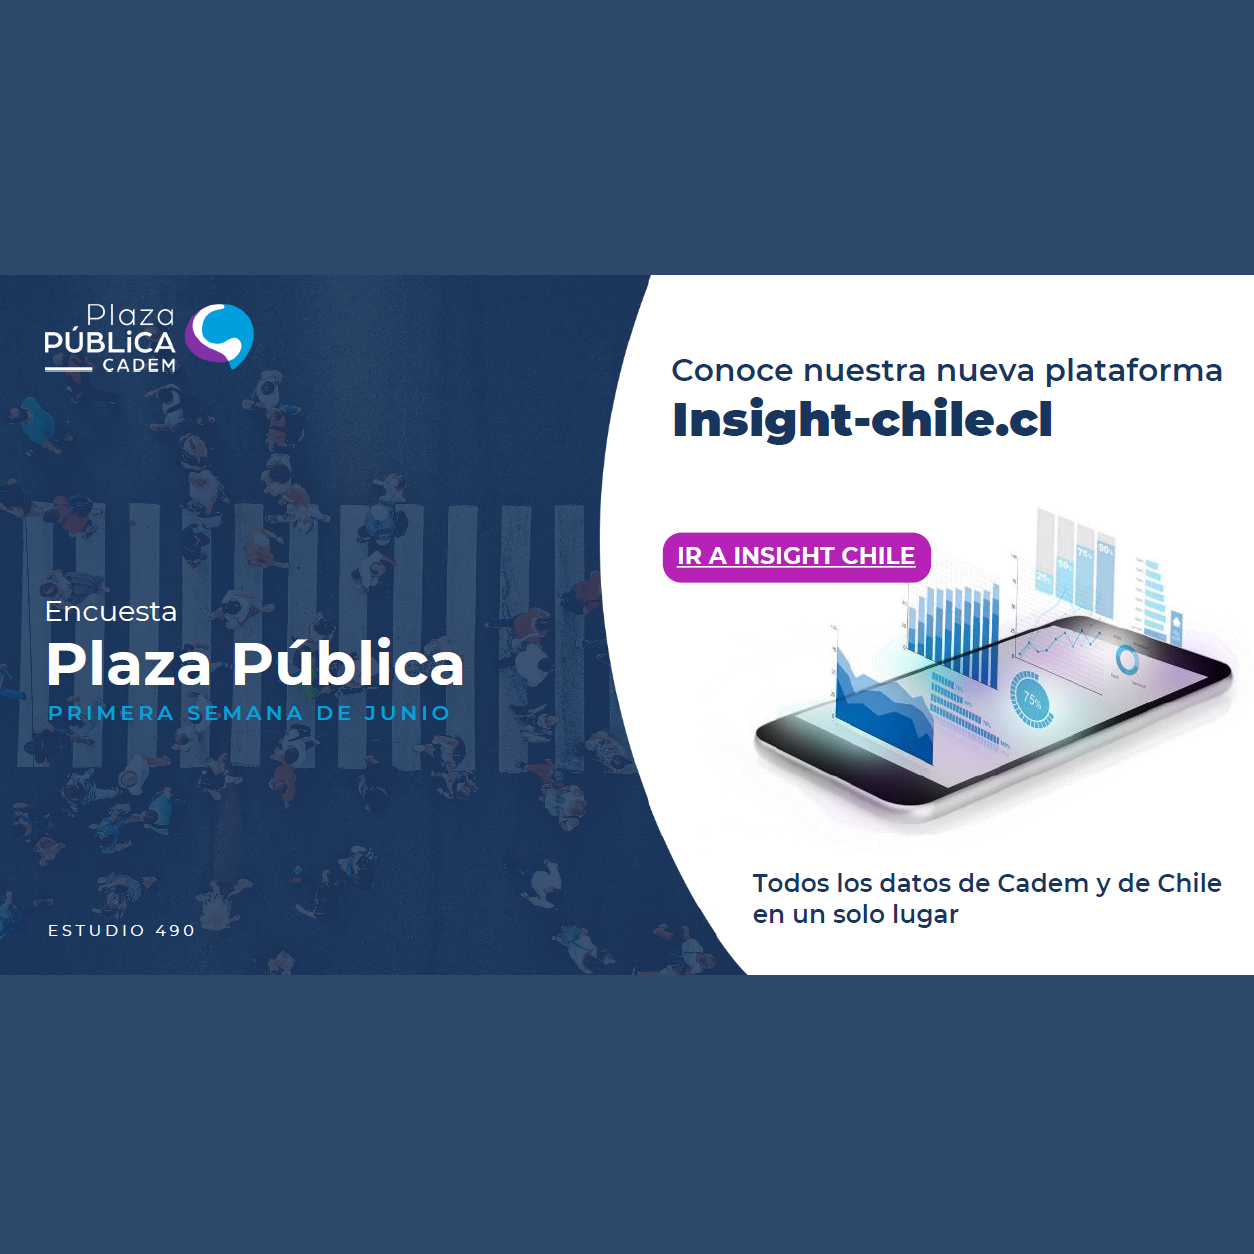 Estudio: Encuesta Plaza Pública – 1ra semana de junio